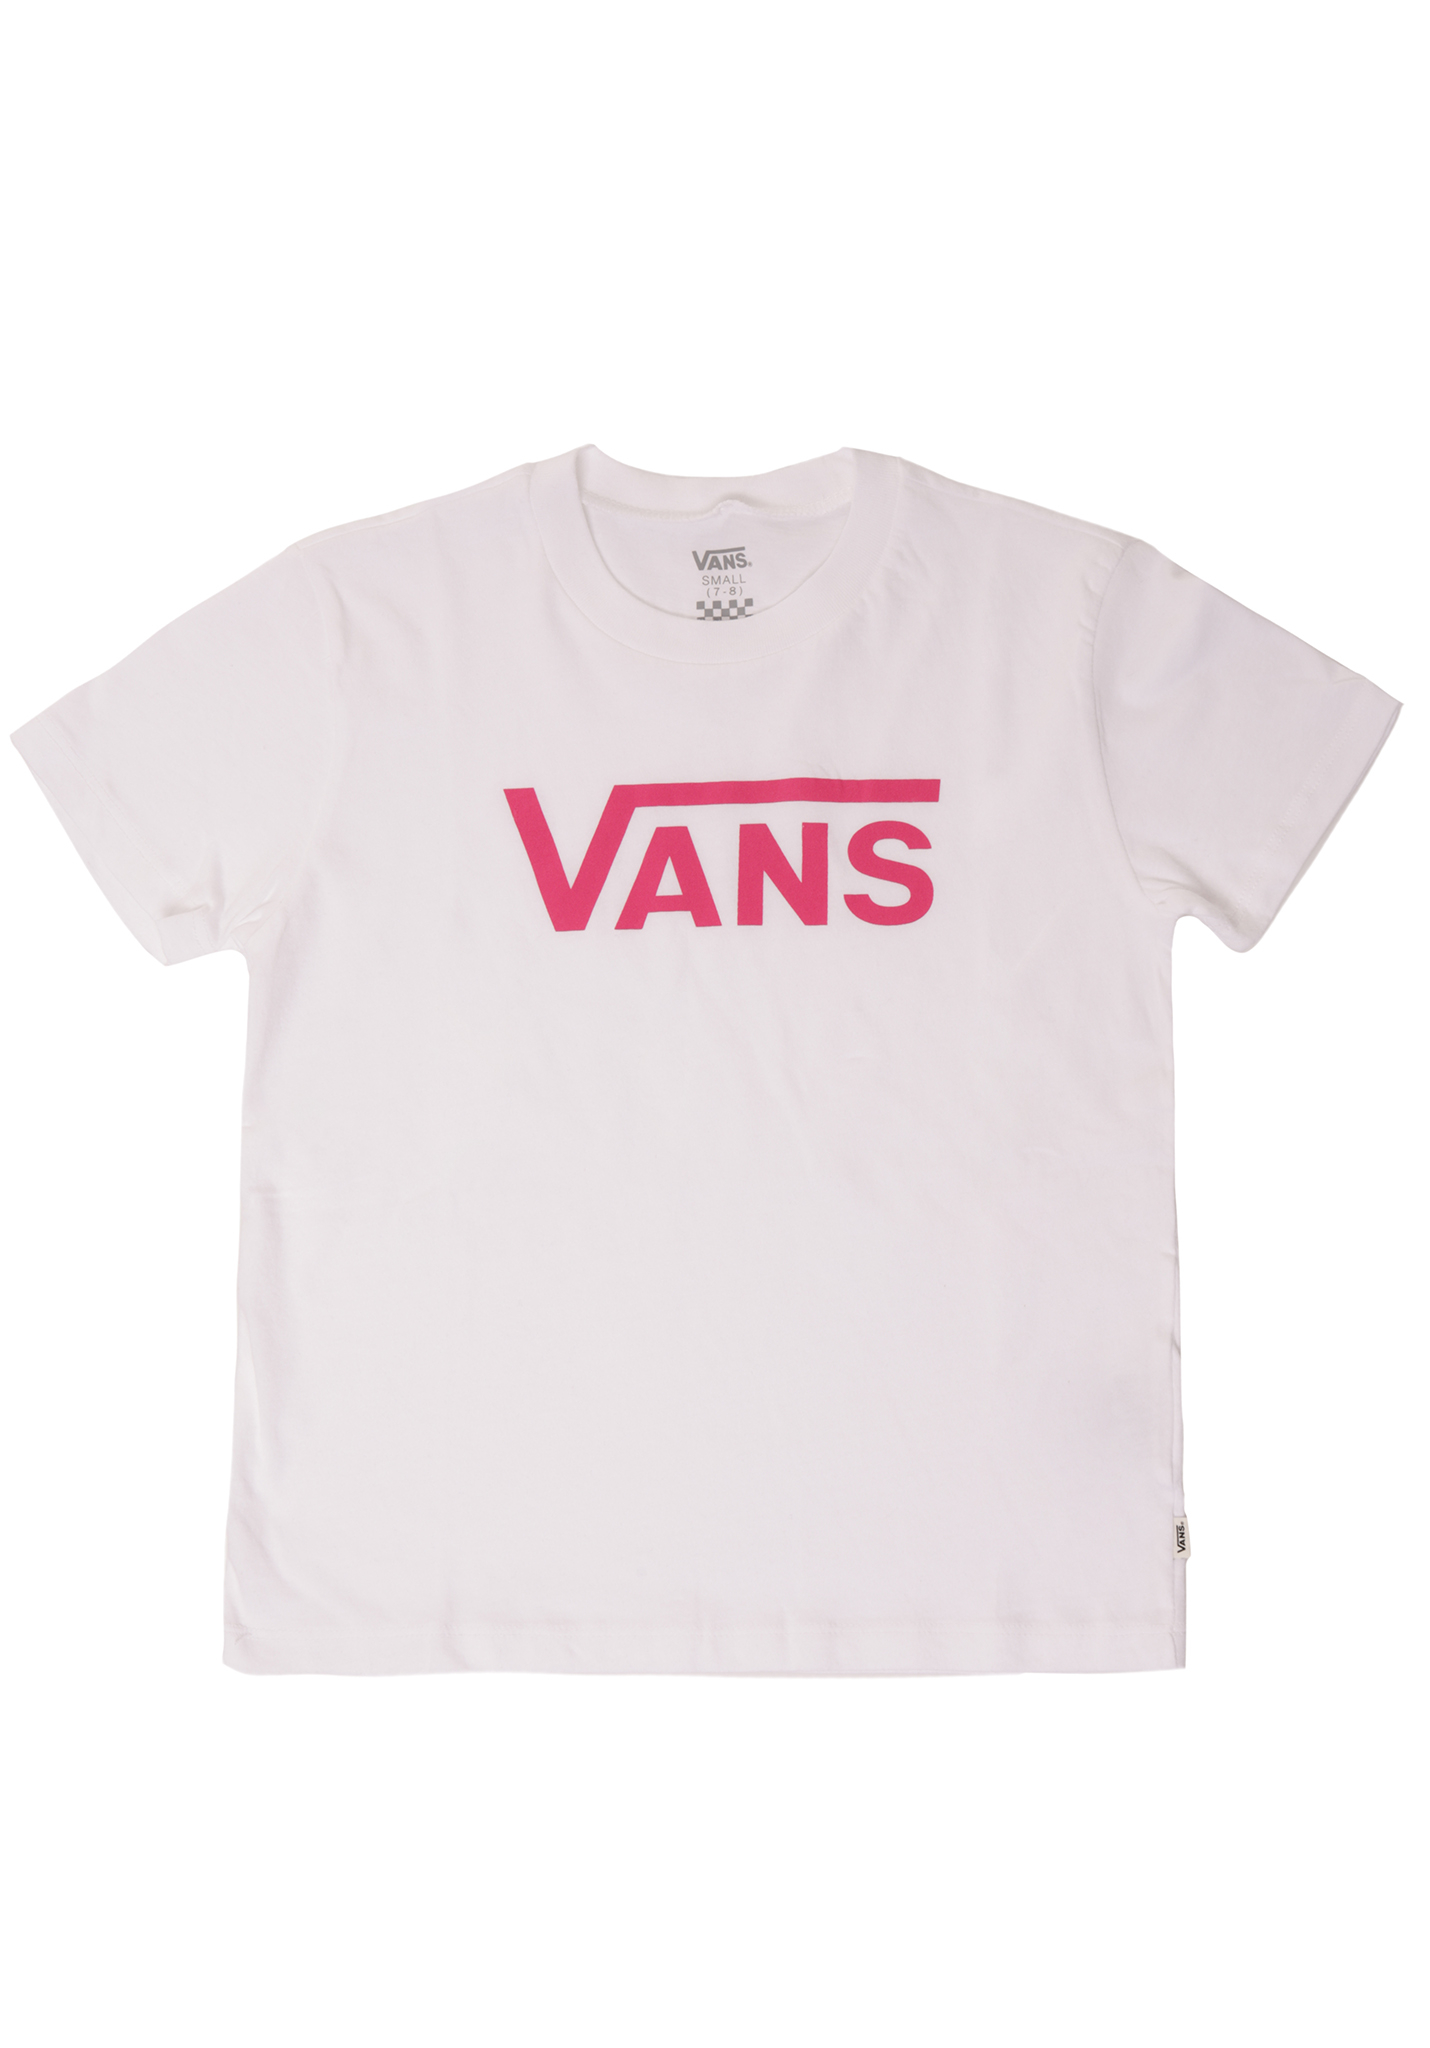 Vans Flying V T-Shirt weiß/fuchsia-violett S